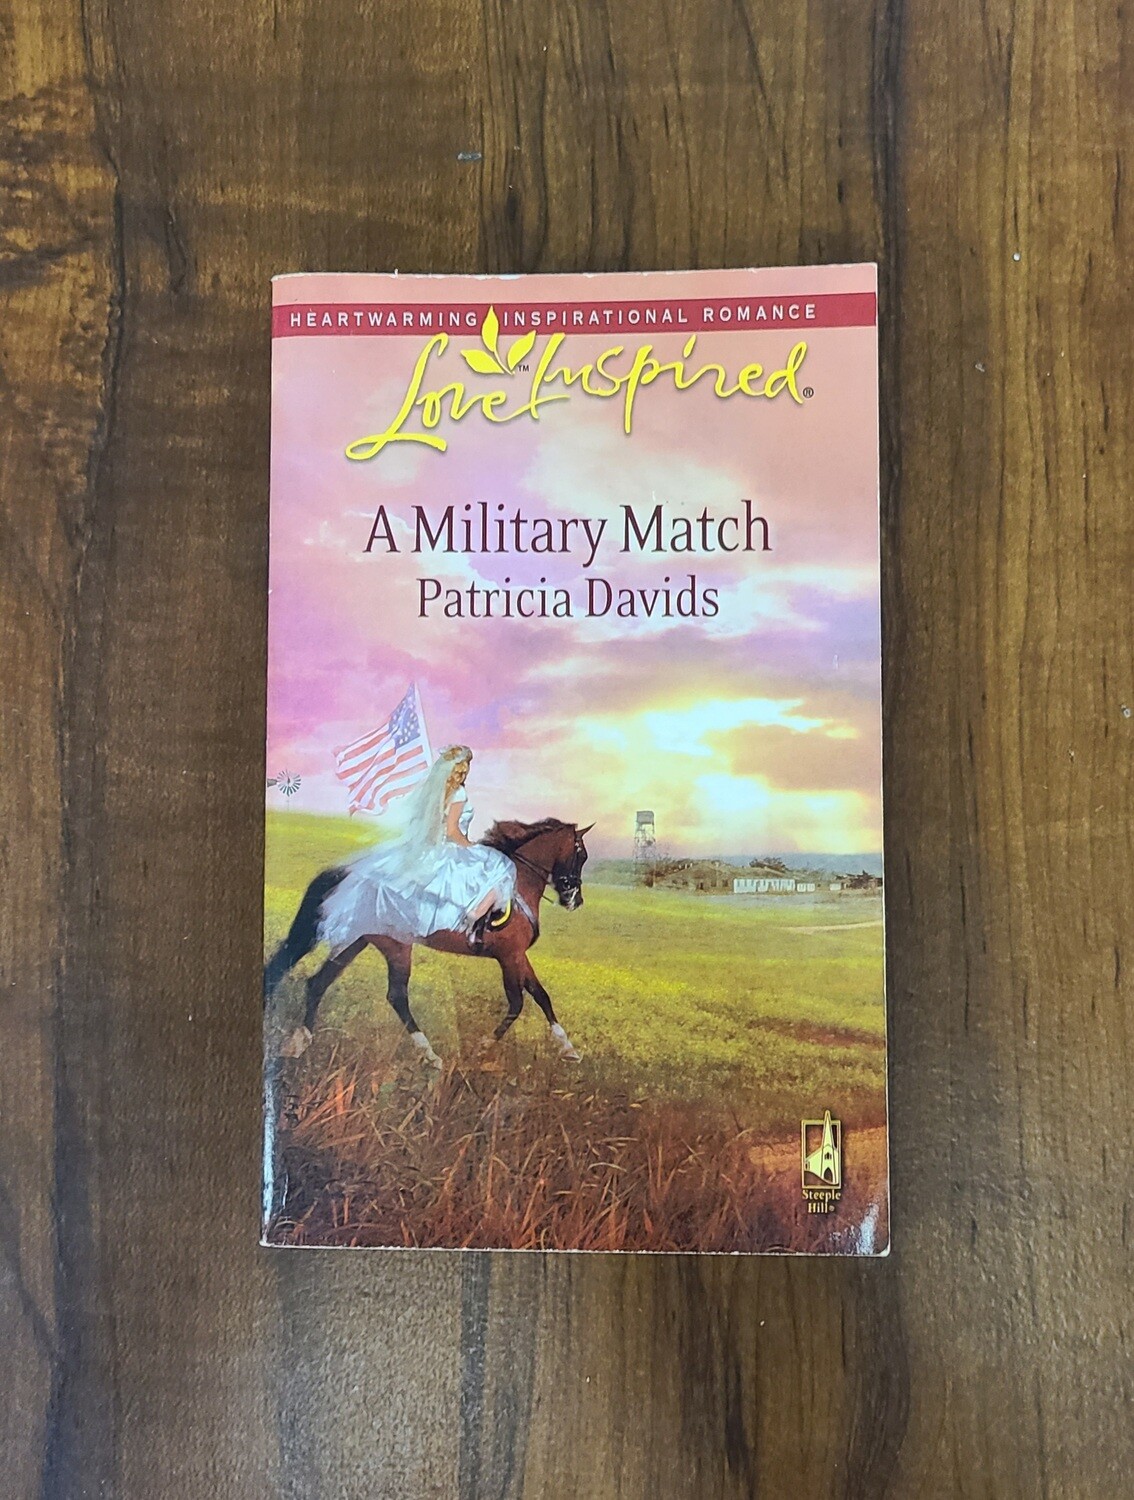 A Military Match by Patricia Davids